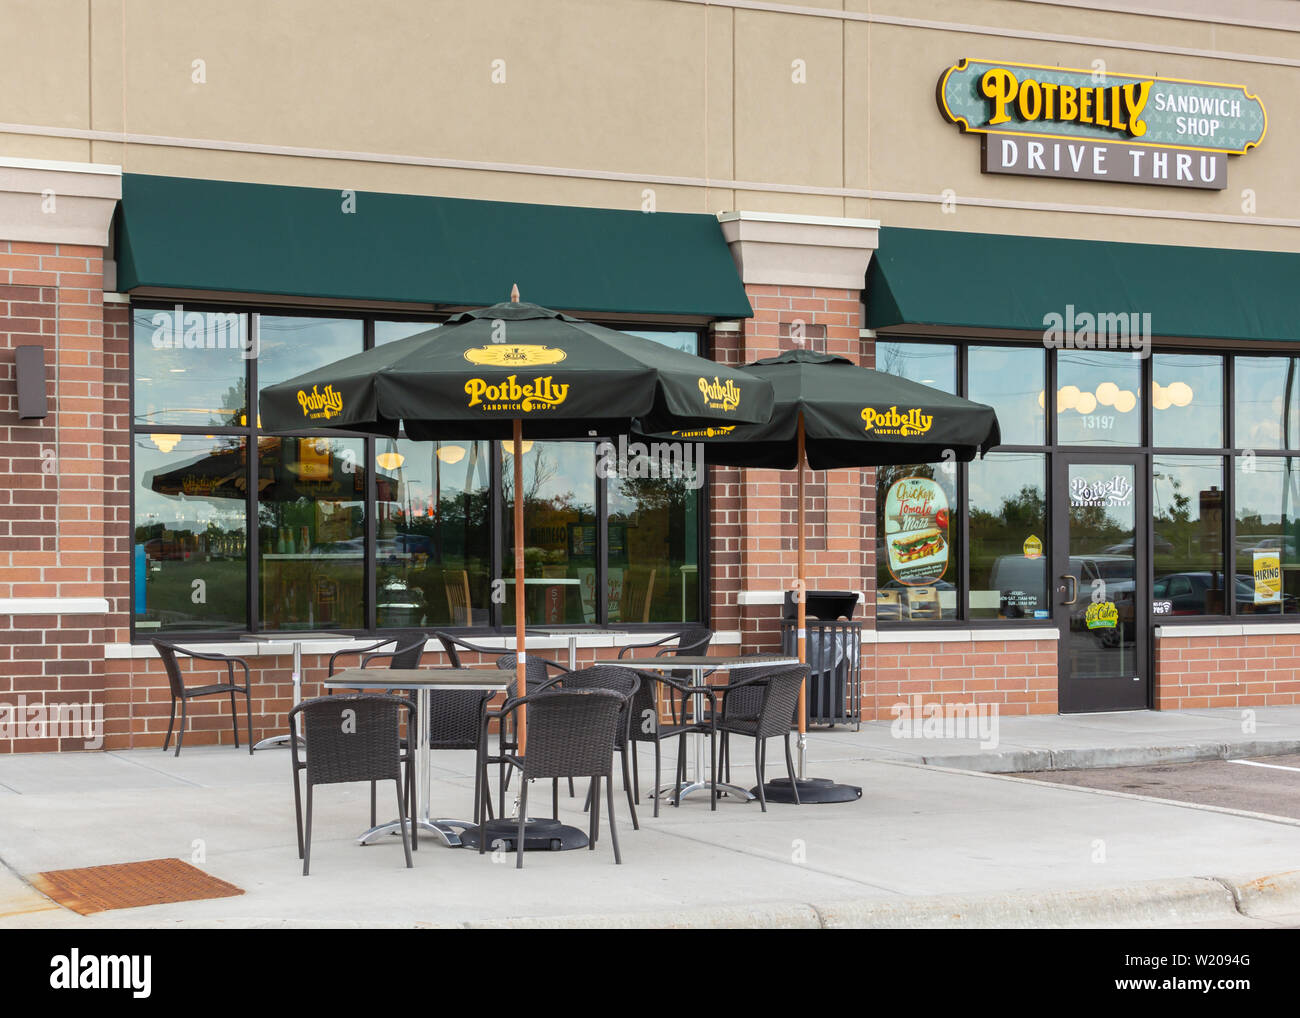 STILLWATER, MN/USA - JULY 3, 2019: Potbelly Sandwich Shop exterior sign and trademark logo. Stock Photo